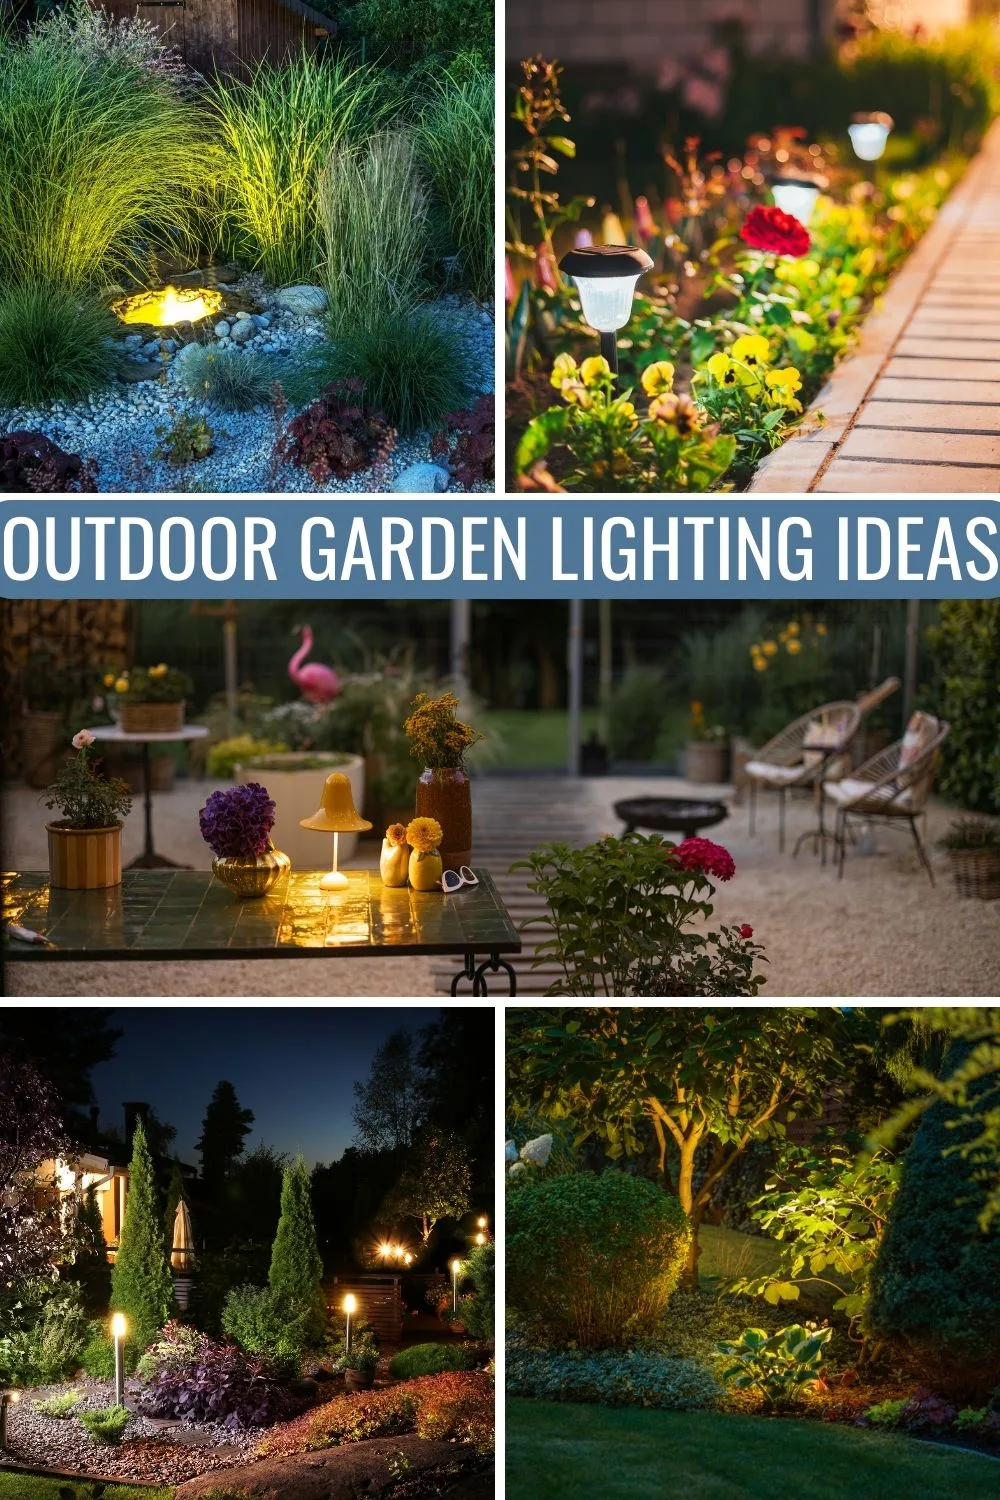 Outdoor garden lighting ideas.